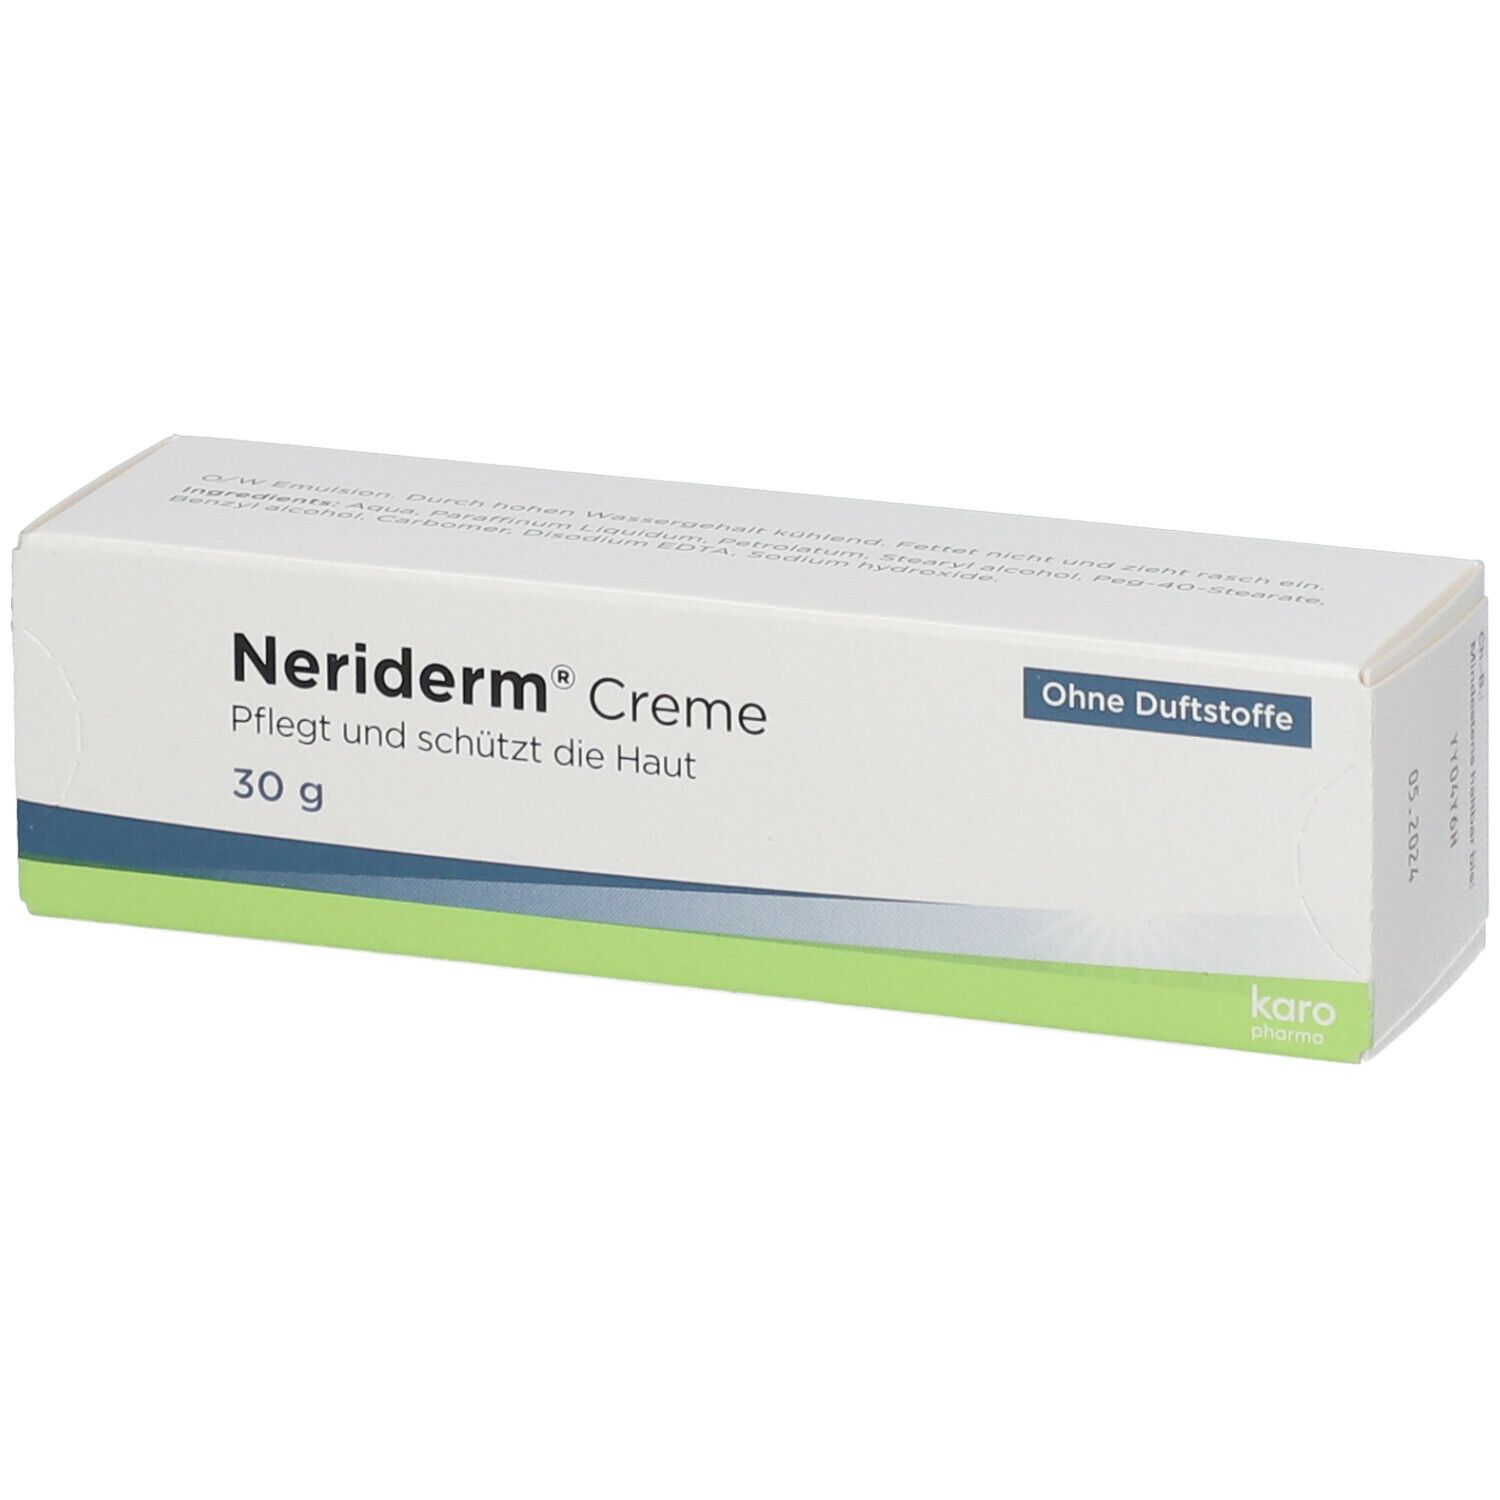 Image of Neriderm® Creme